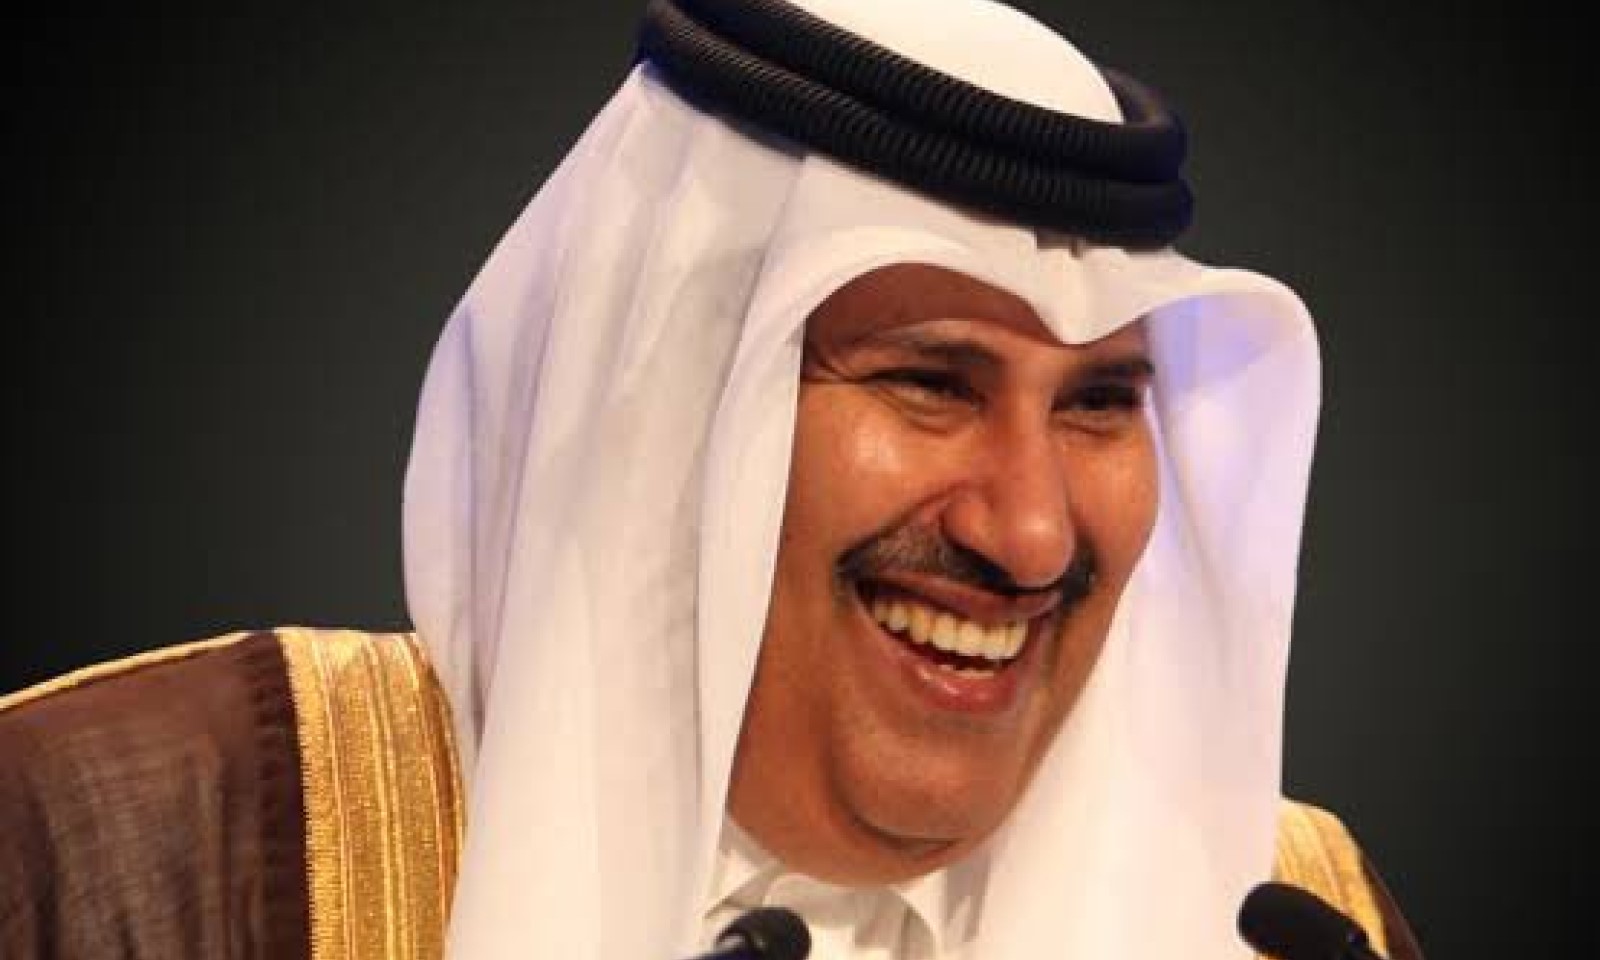 Hamad bin Khalifa Al Thani